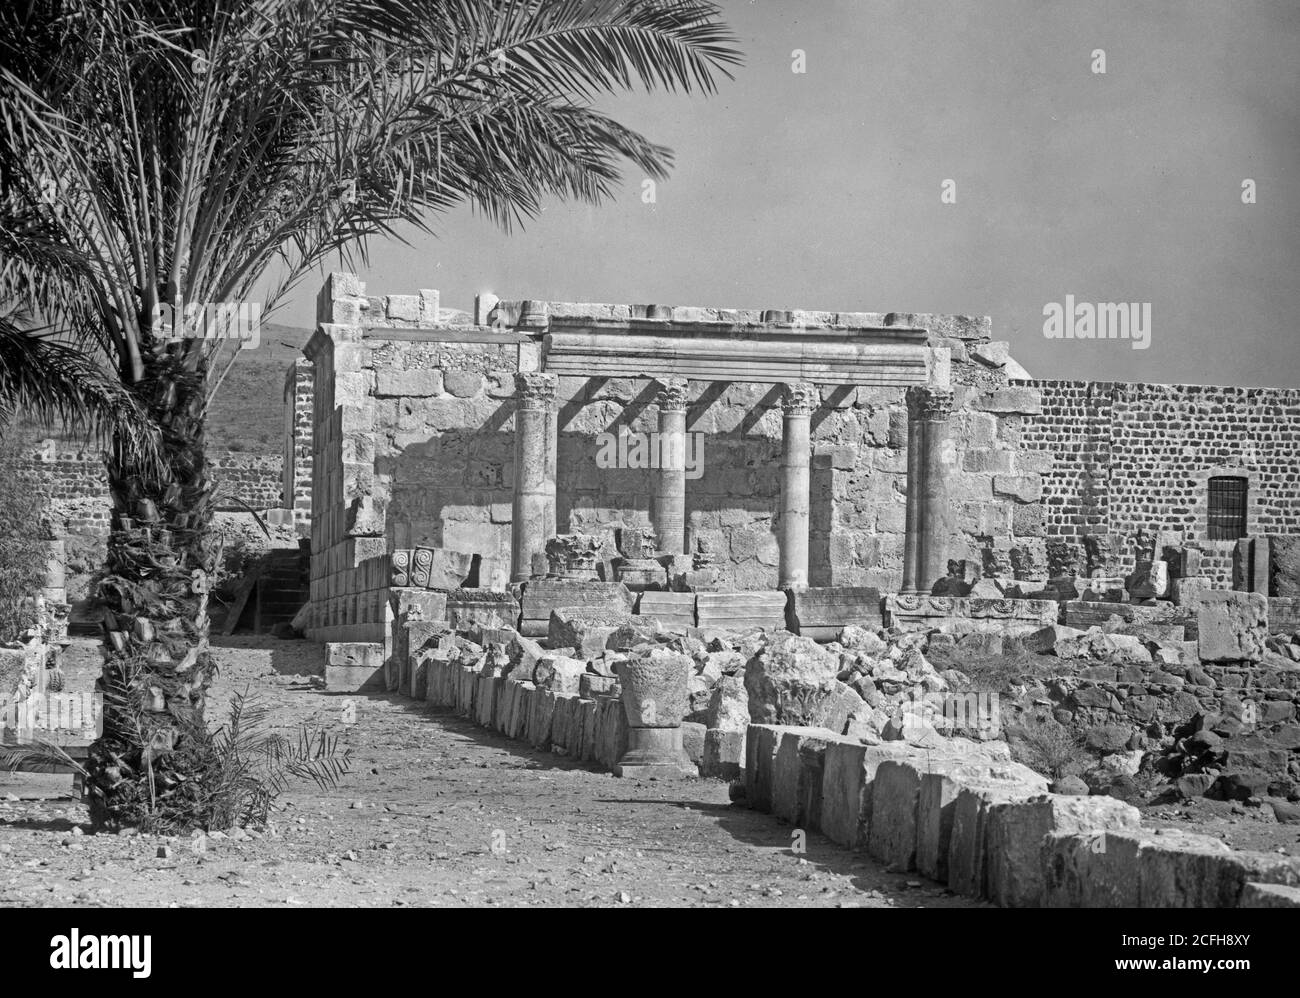 Didascalia originale: Vista del nord. Capernaum. Dire a Hum. La sinagoga restaurata - Località: Israele--Capernaum (città) ca. 1920 Foto Stock